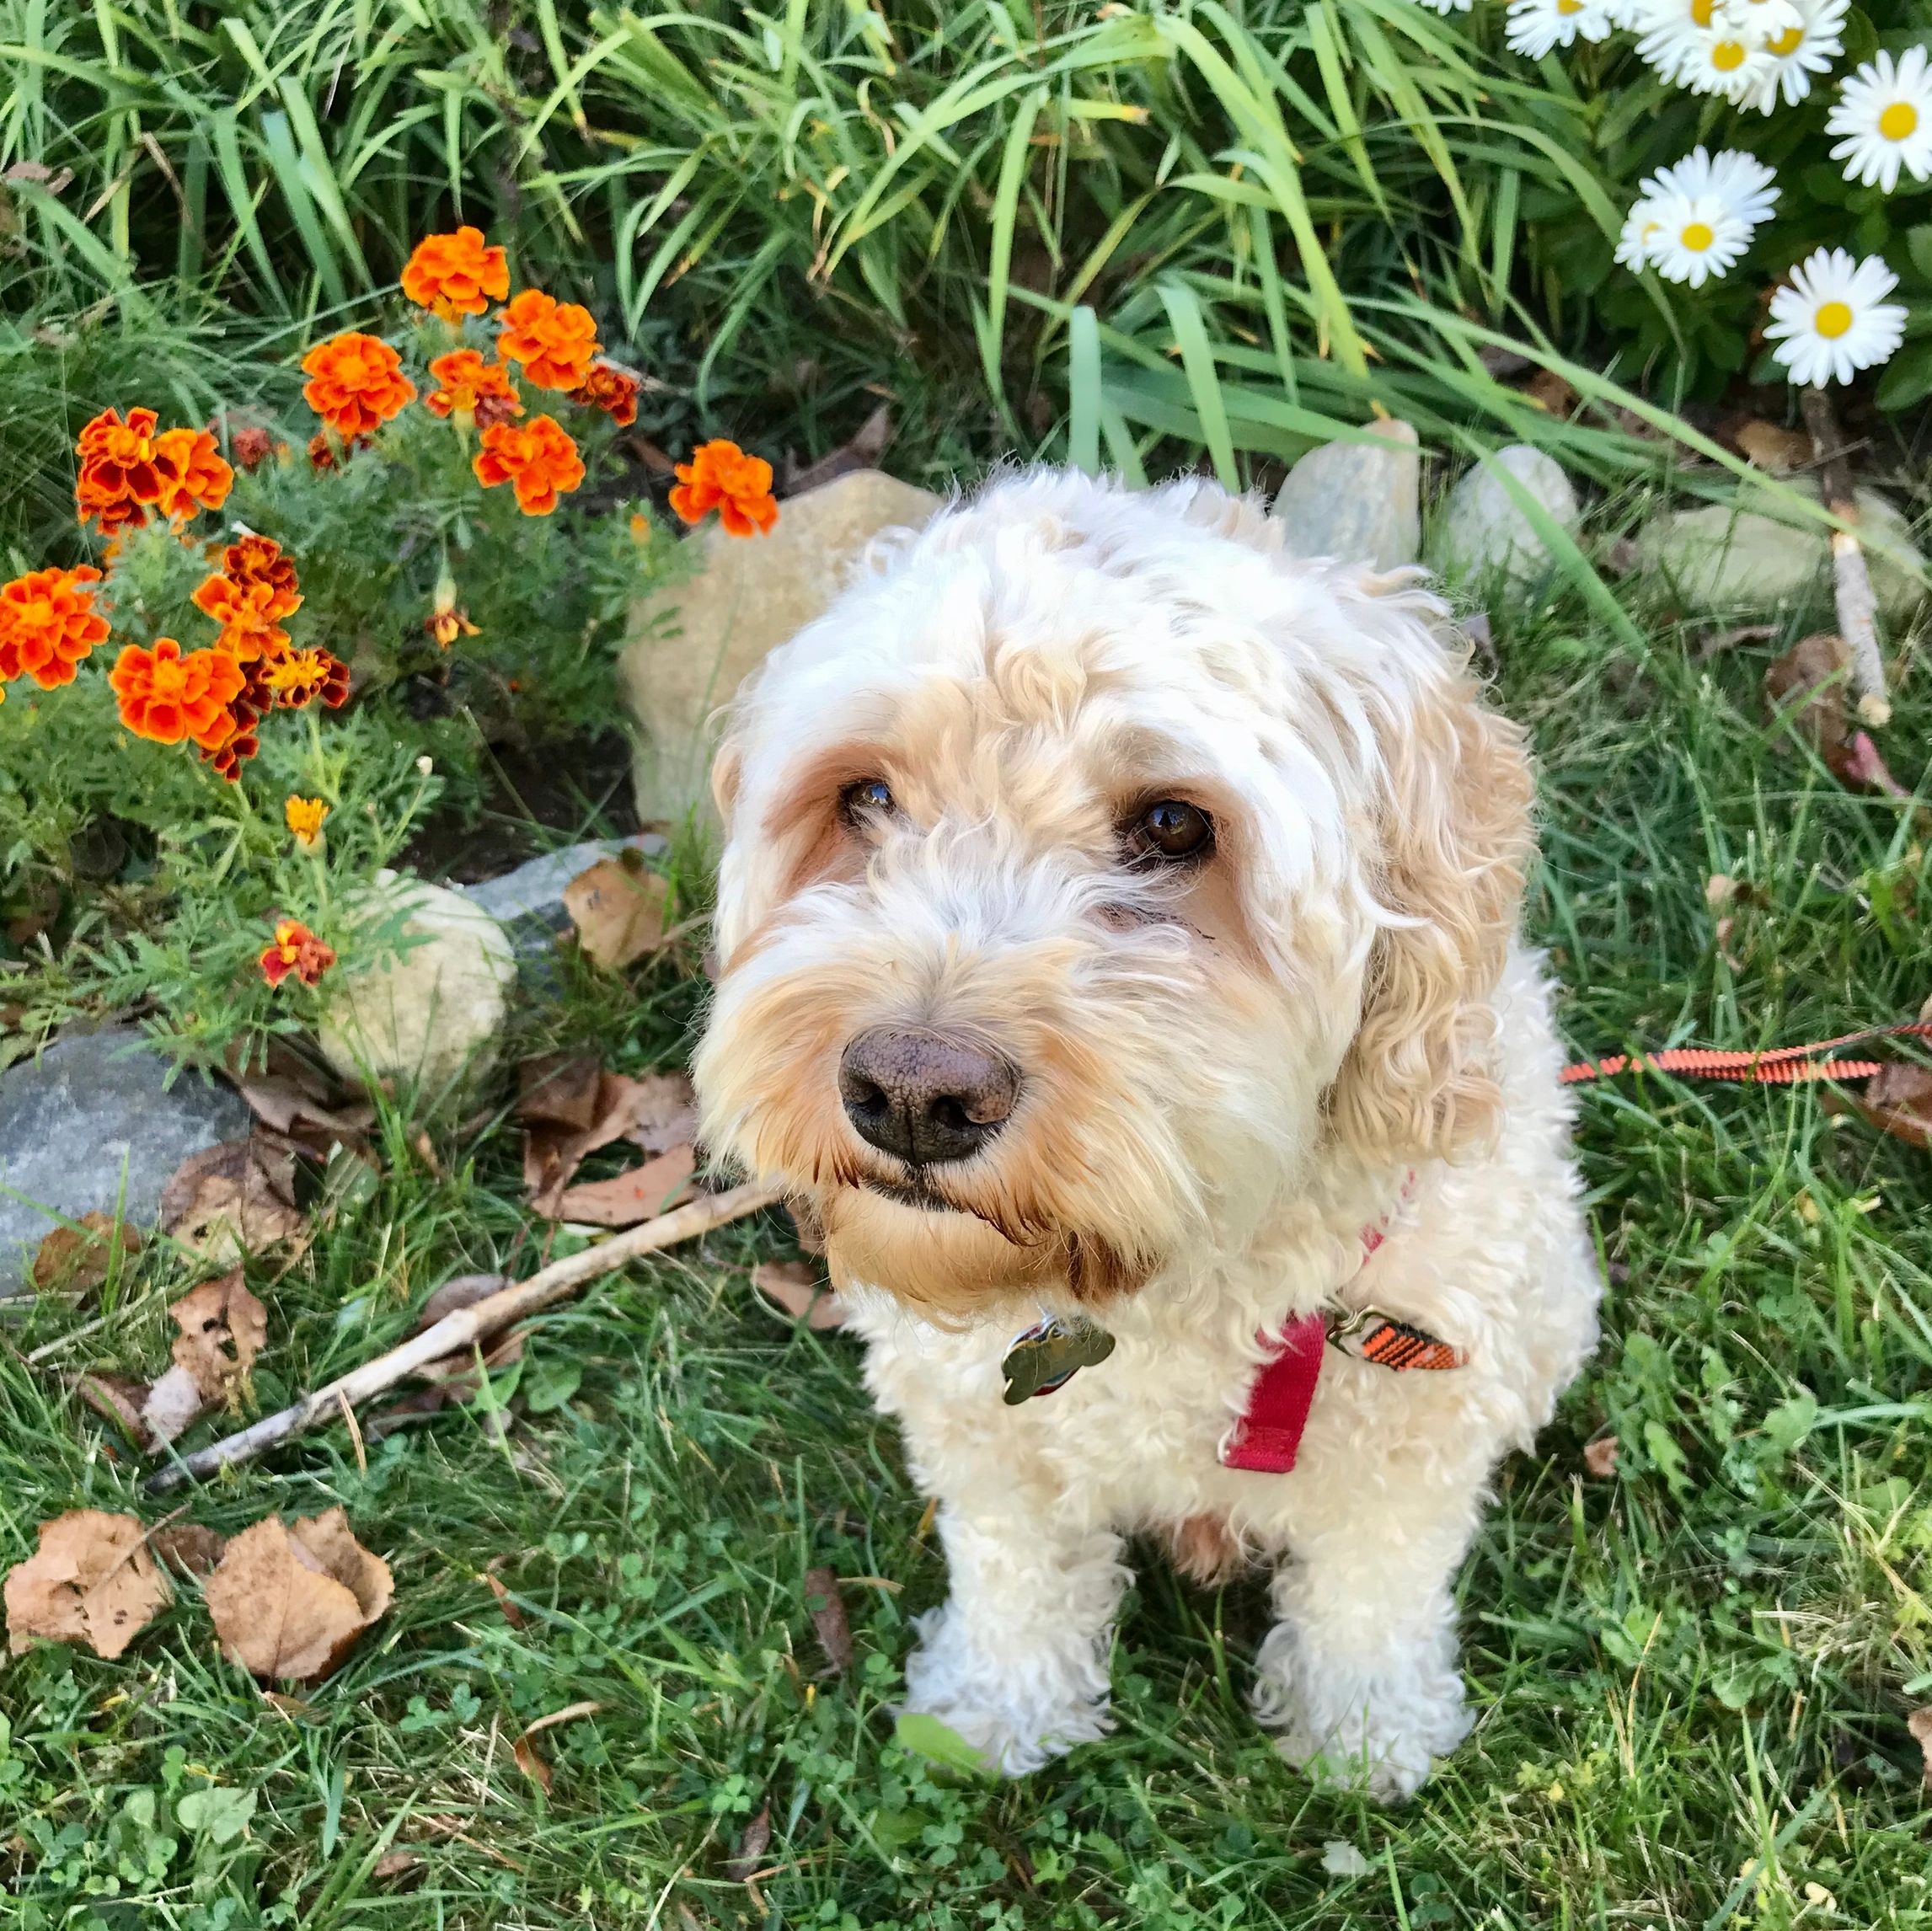 Cute fuzzy dog in garden